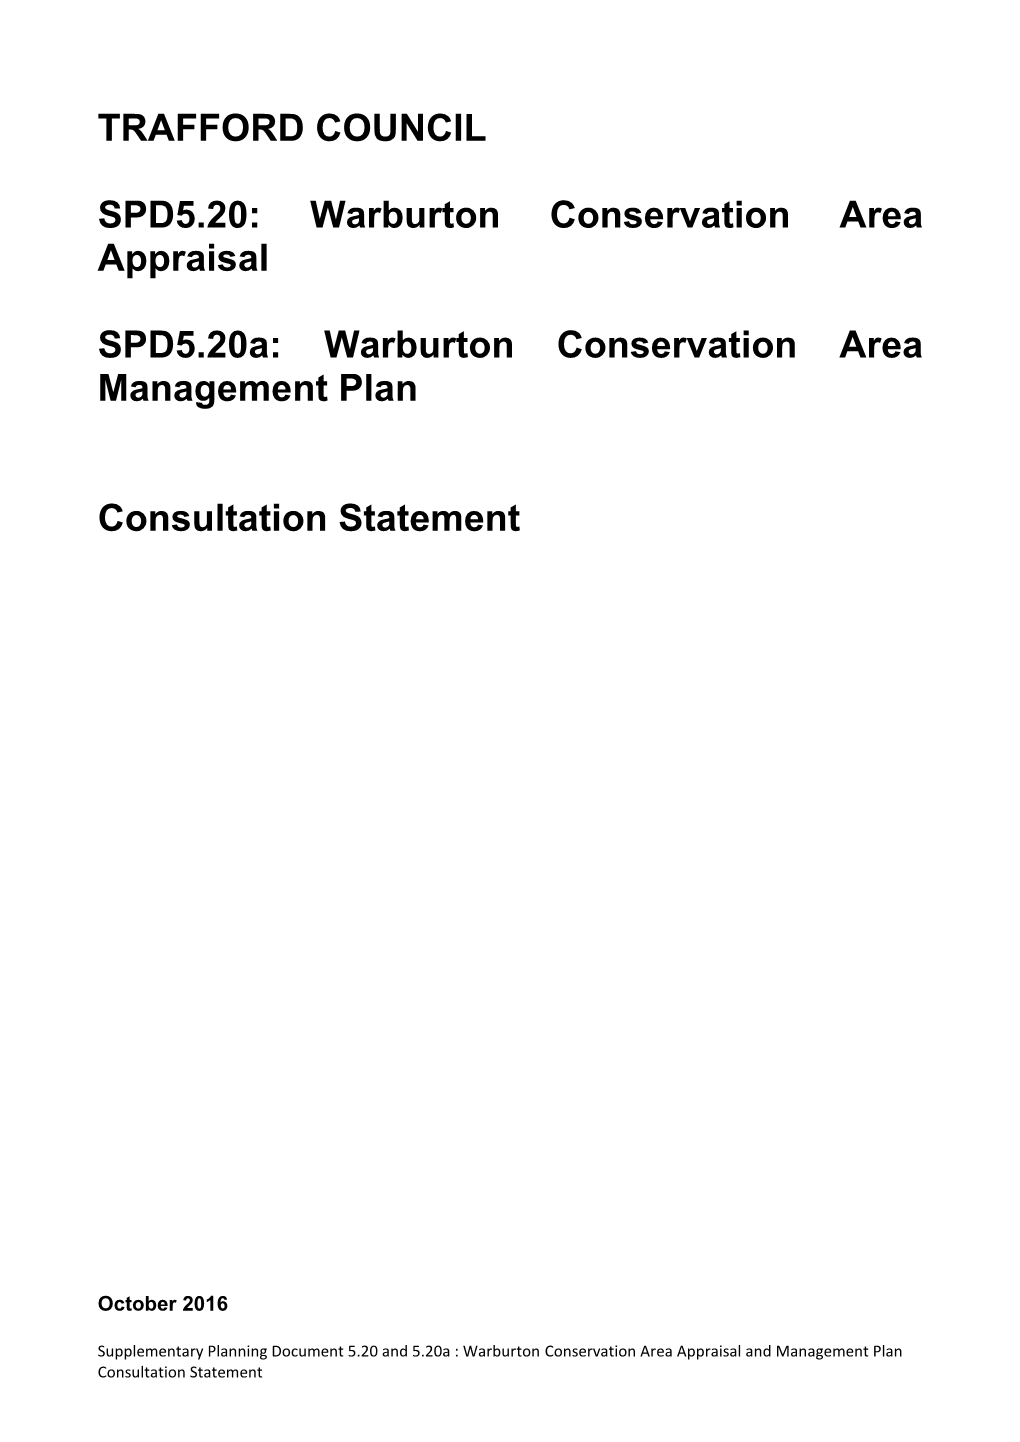 Warburton Conservation Area Appraisal SPD5.20A: Warburton Conservation Area Management Plan Consultat